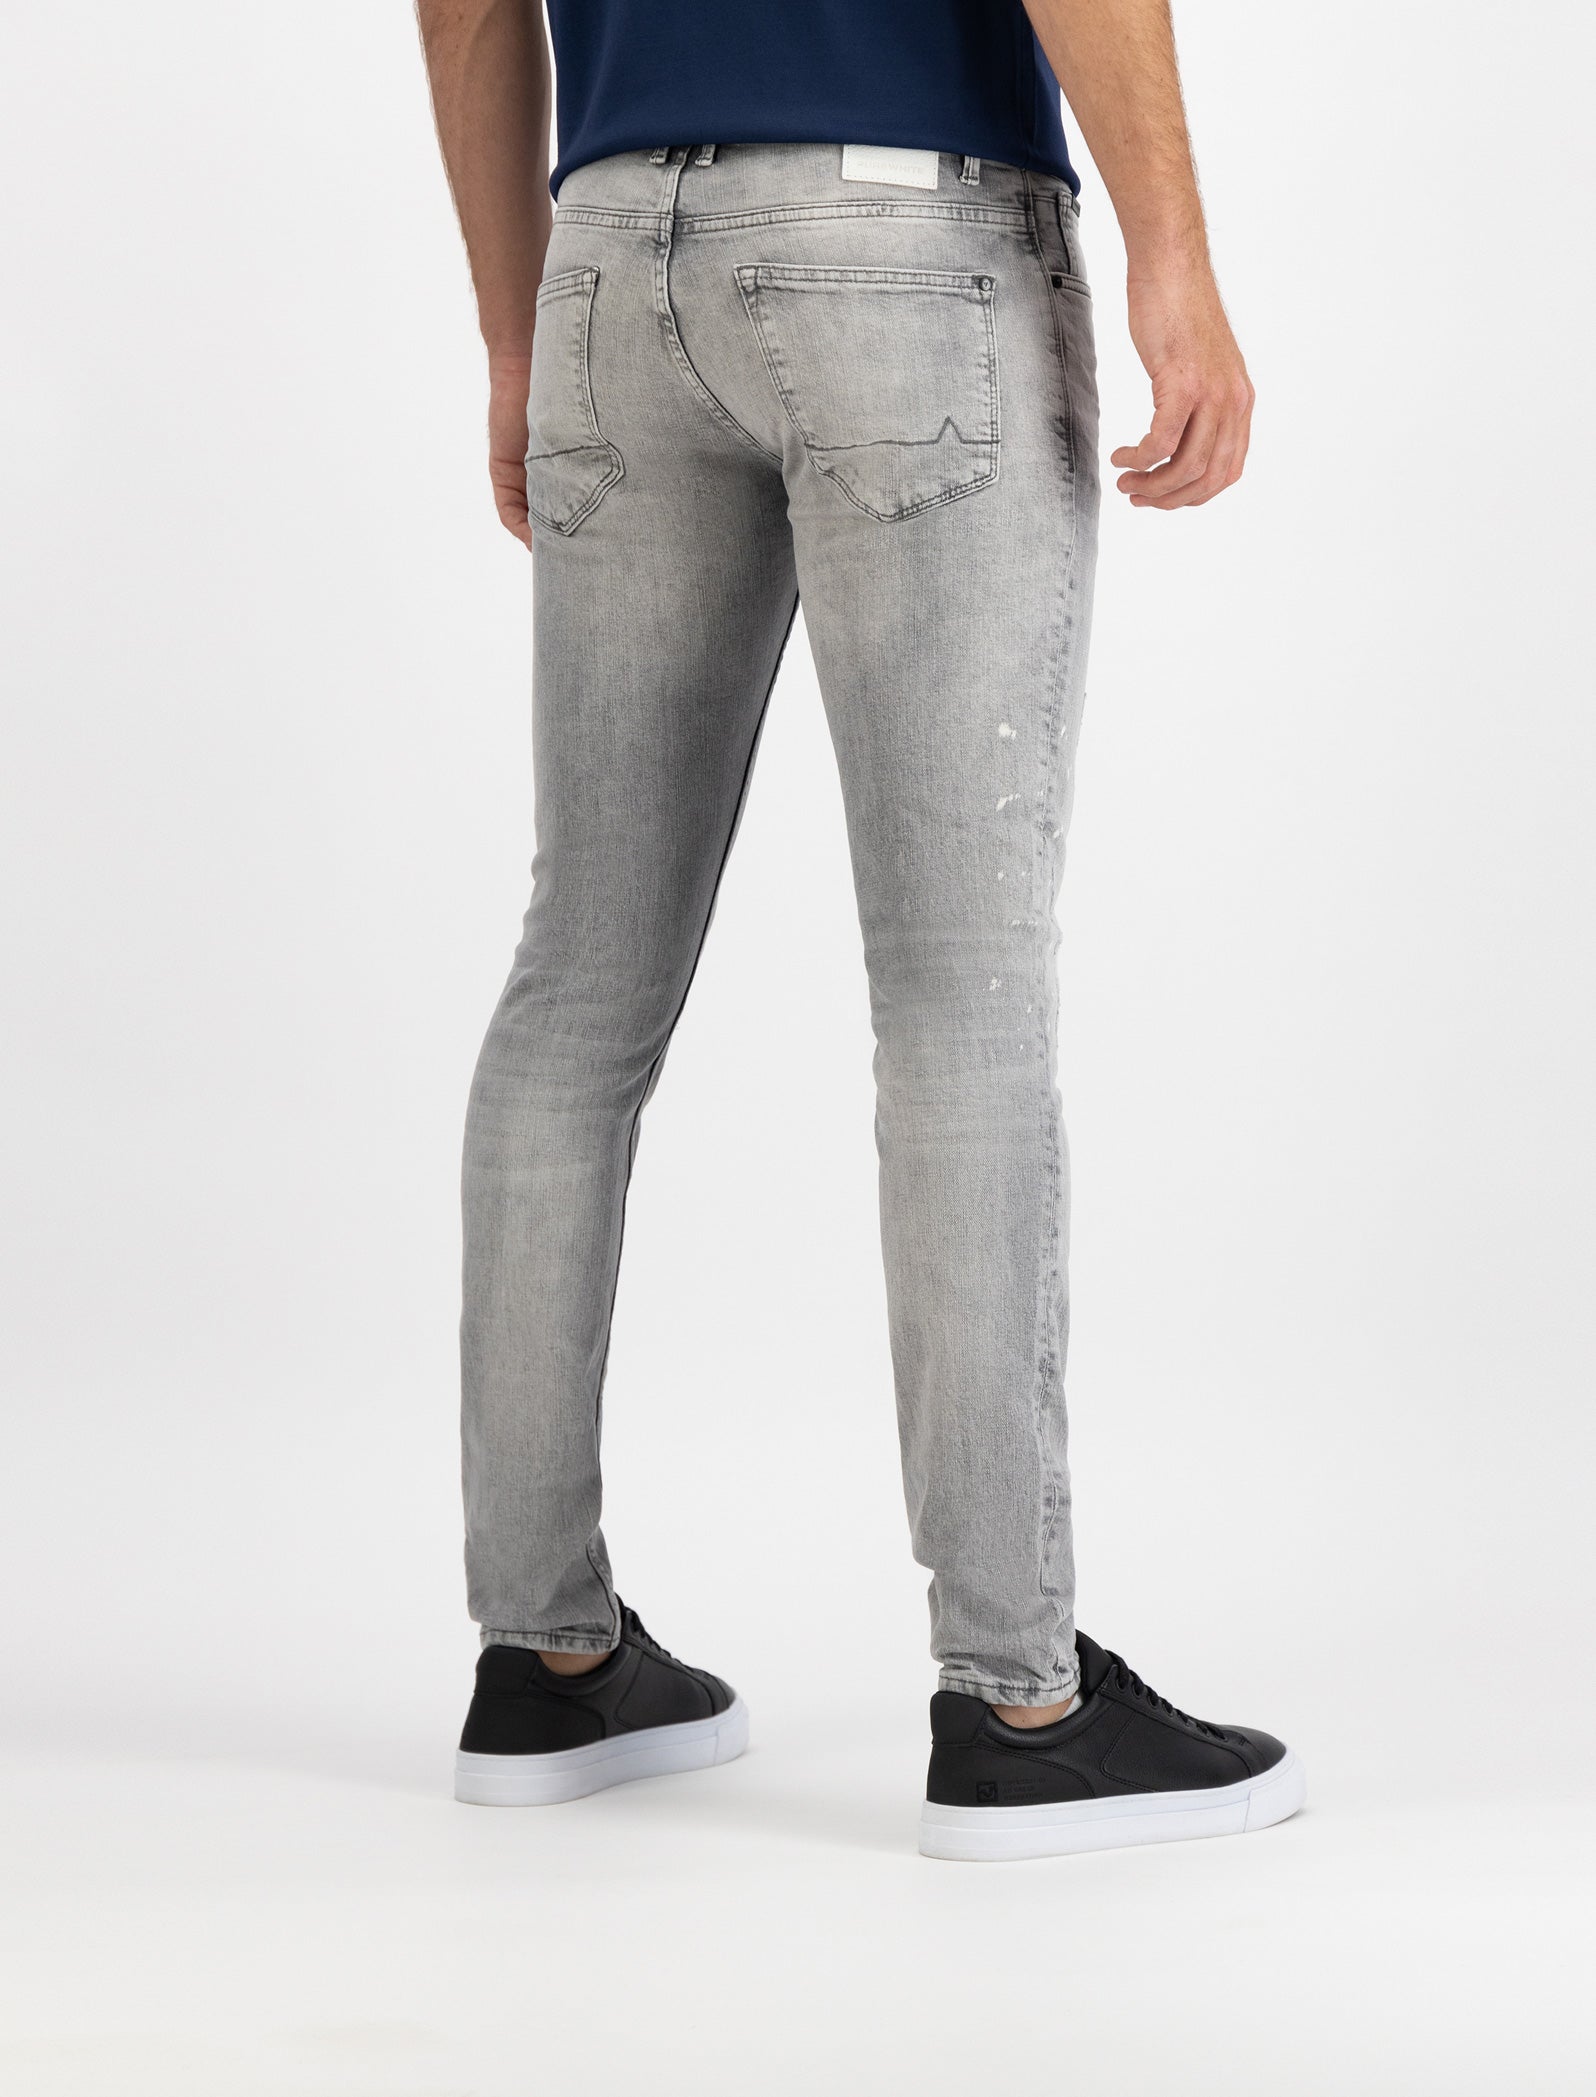 Purewhite Jeans The Jone W0828